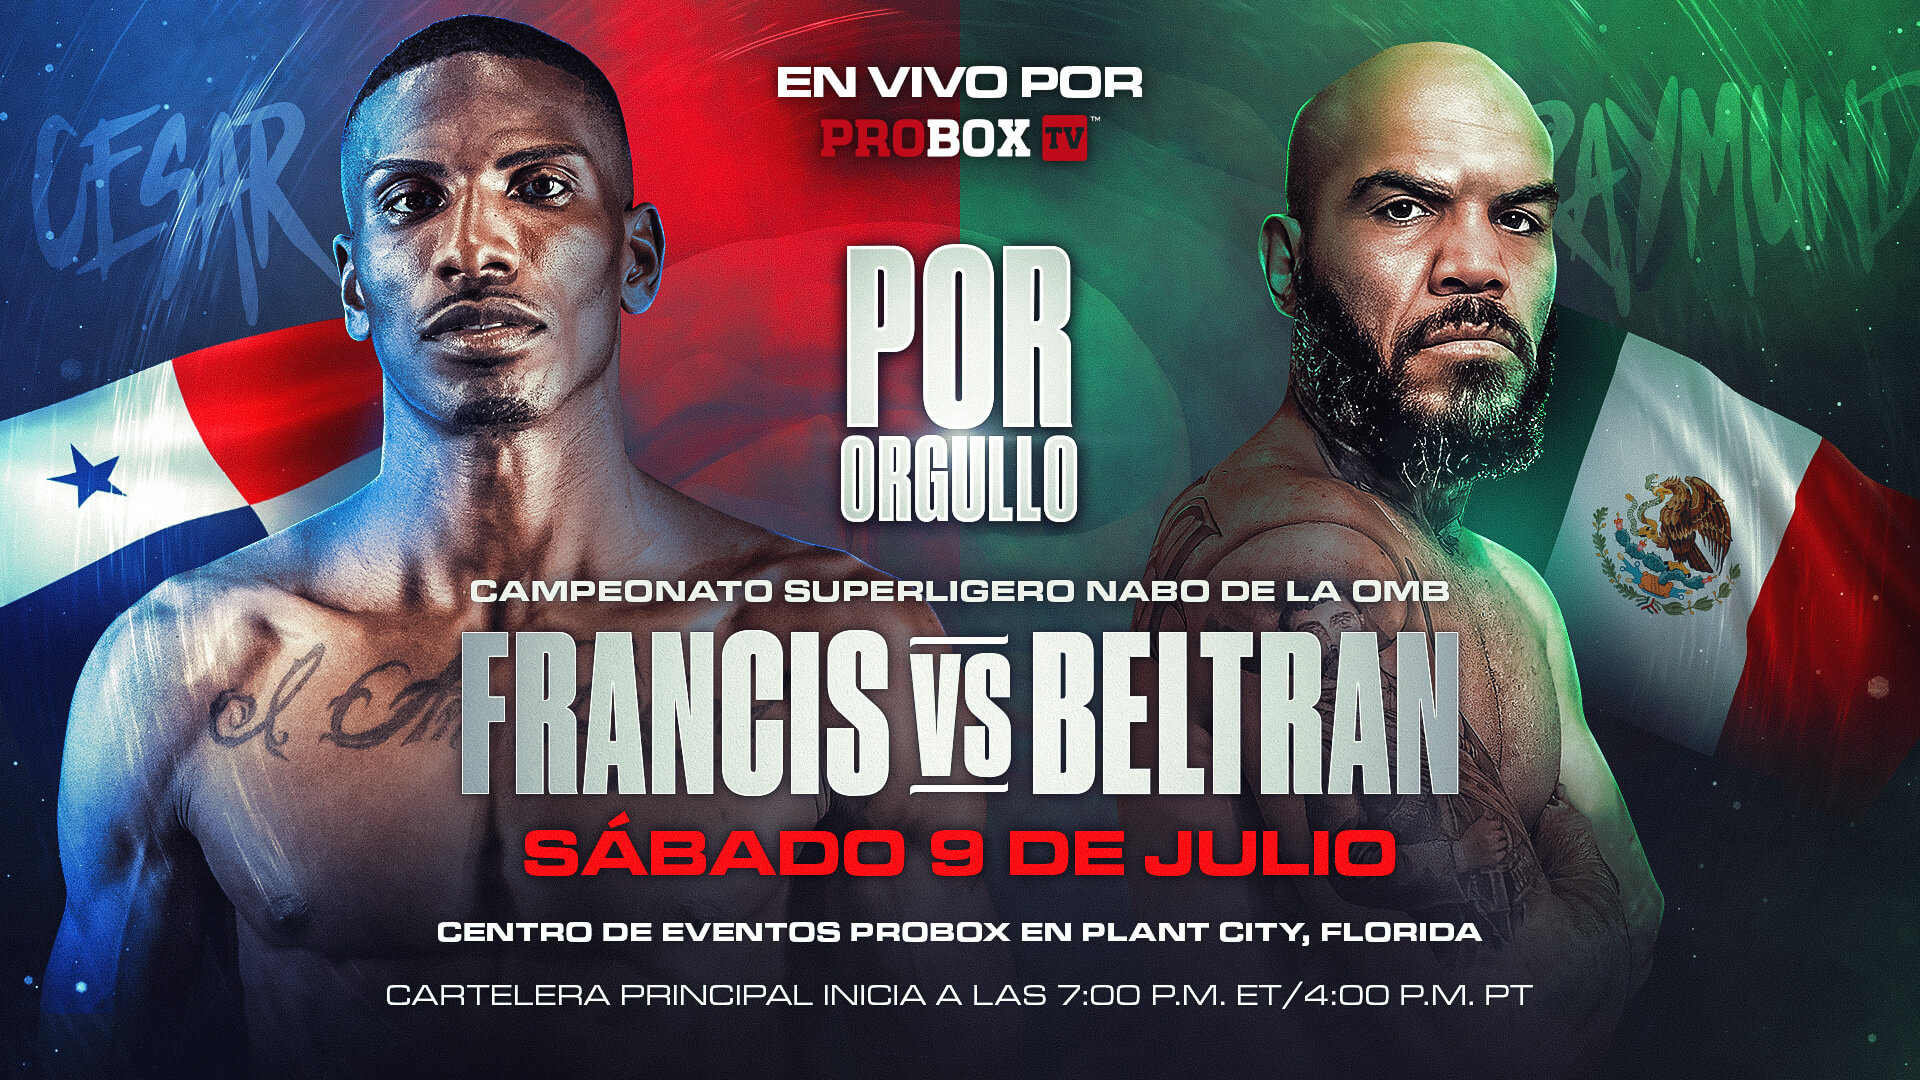 Francis vs Beltran July9th at ProBox Event Center in Plantation City, Florida